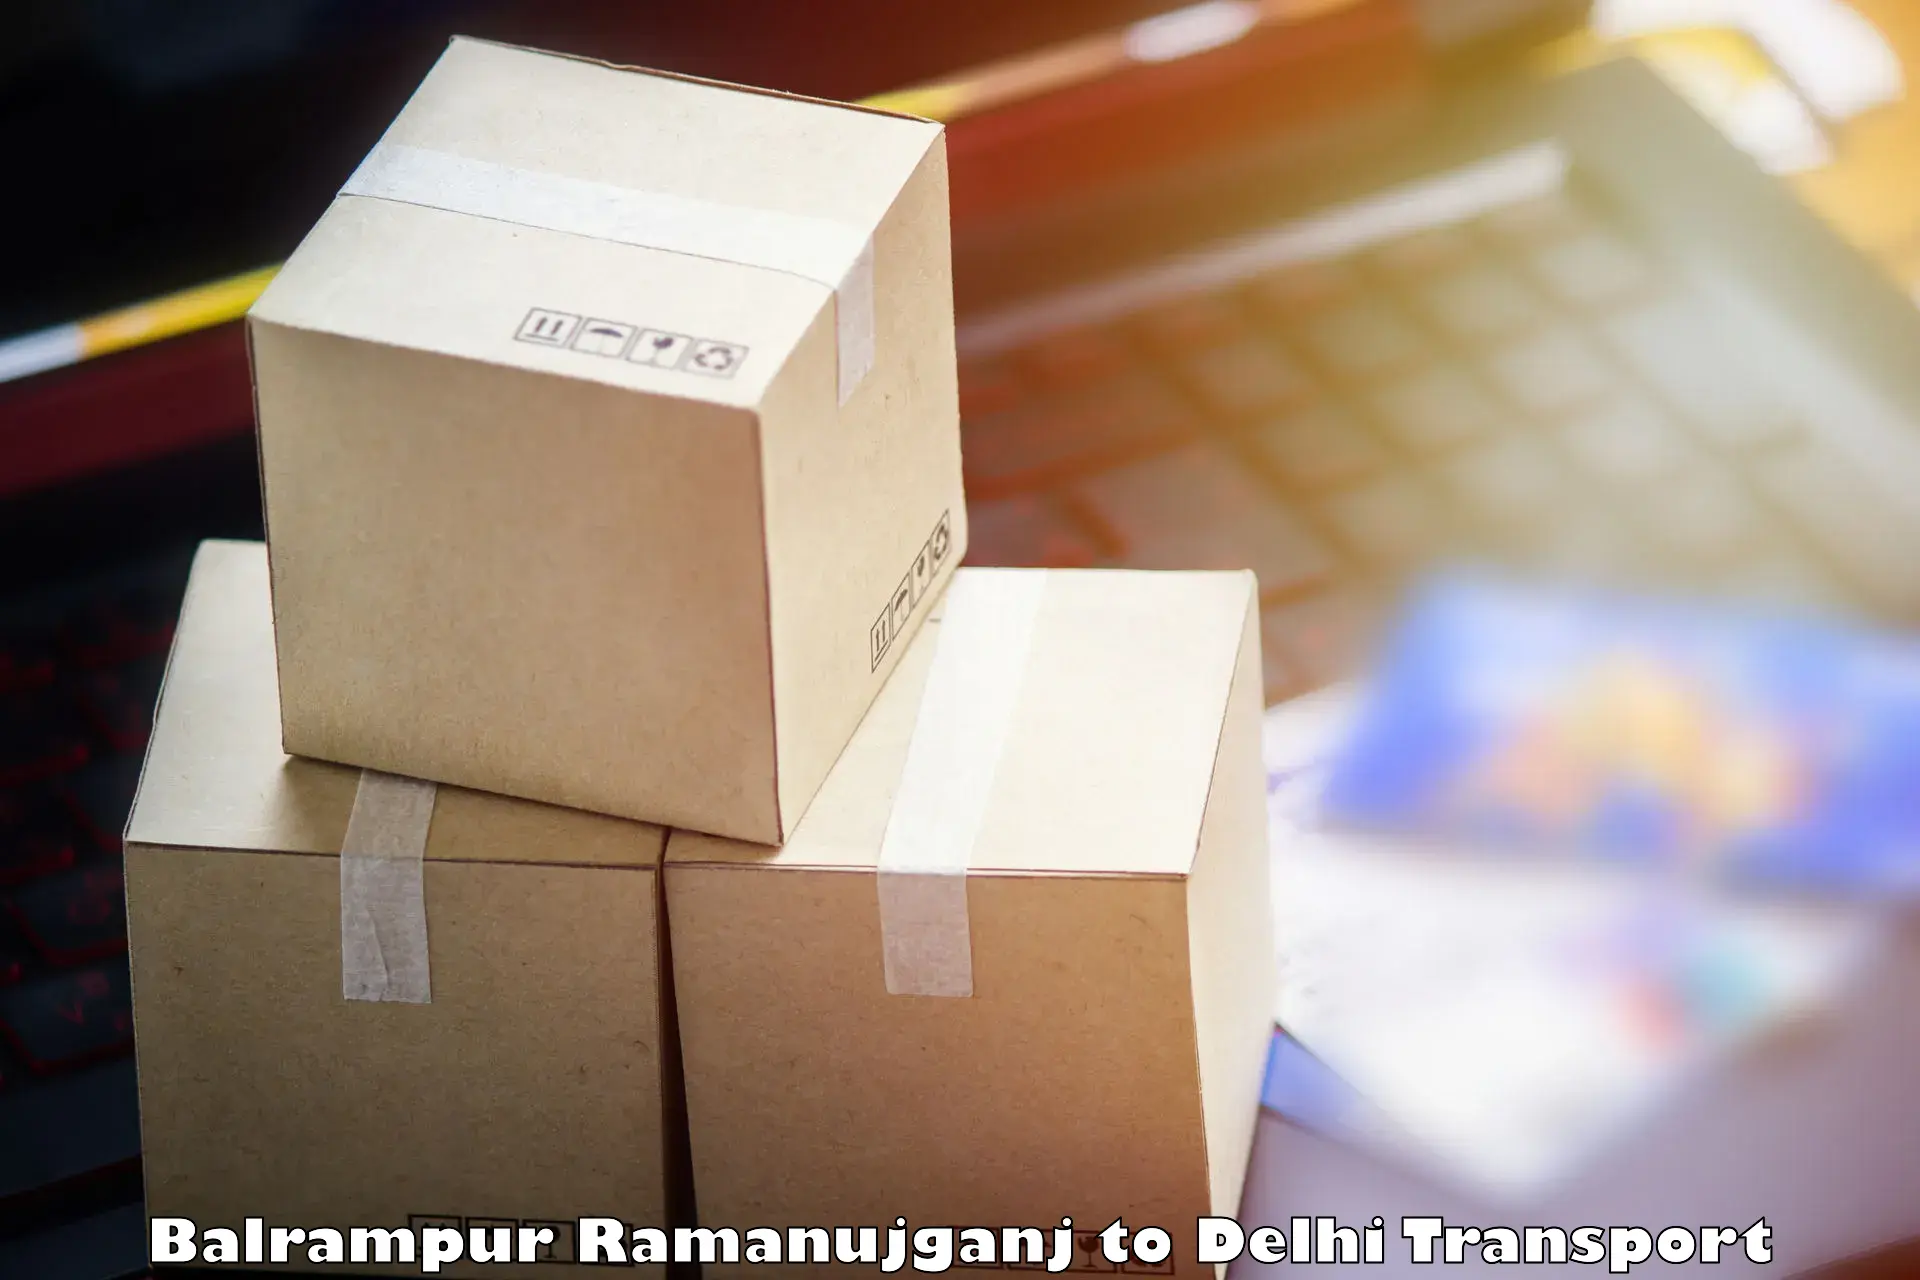 Shipping partner Balrampur Ramanujganj to Delhi